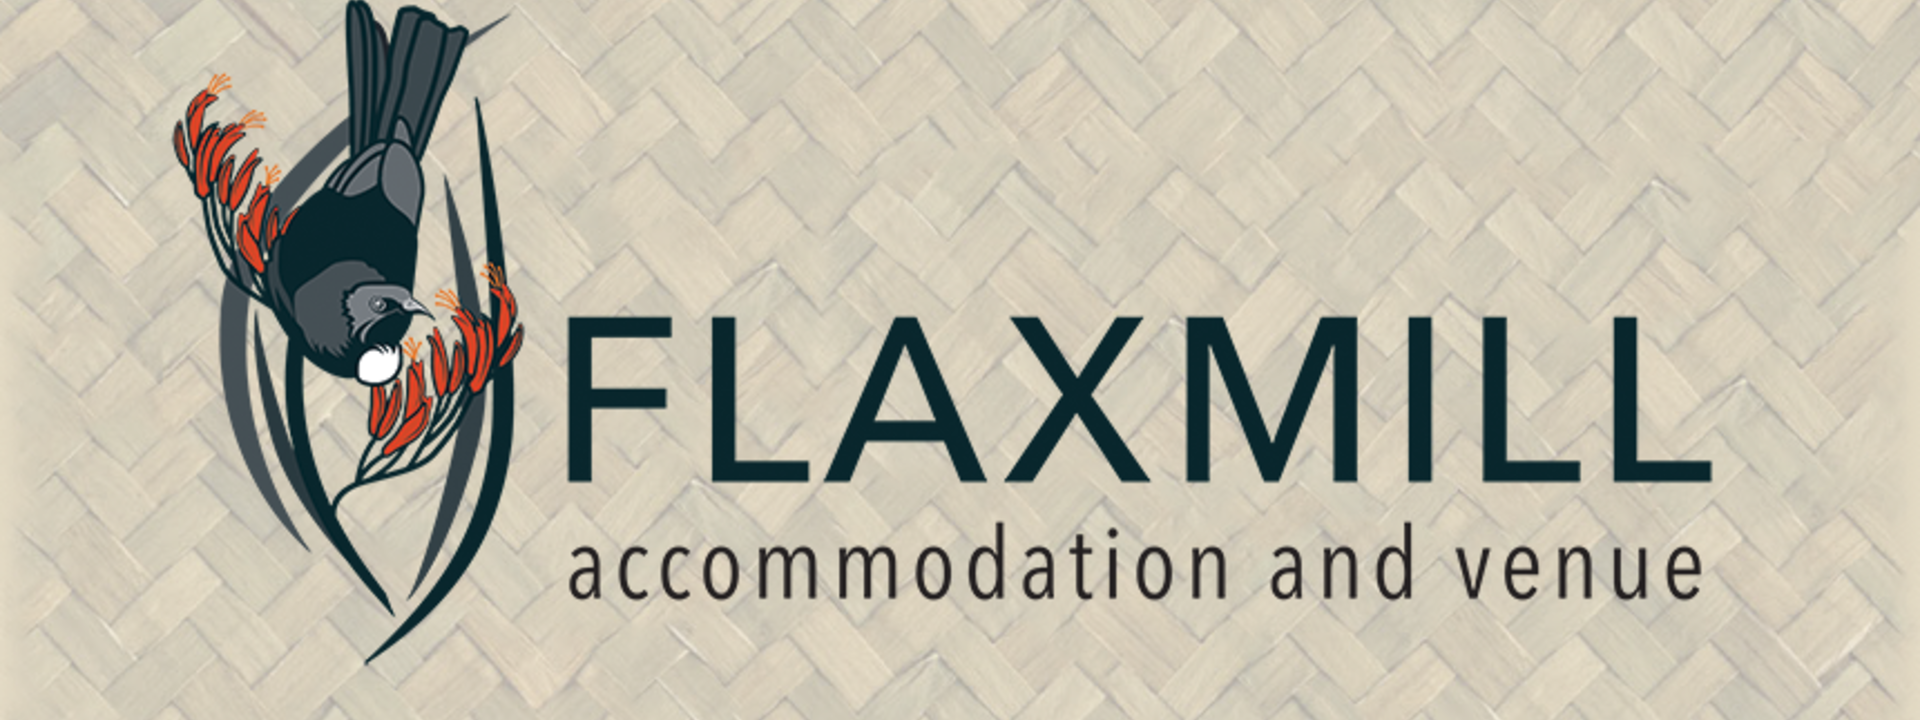 flax-fb-logo-2020.png